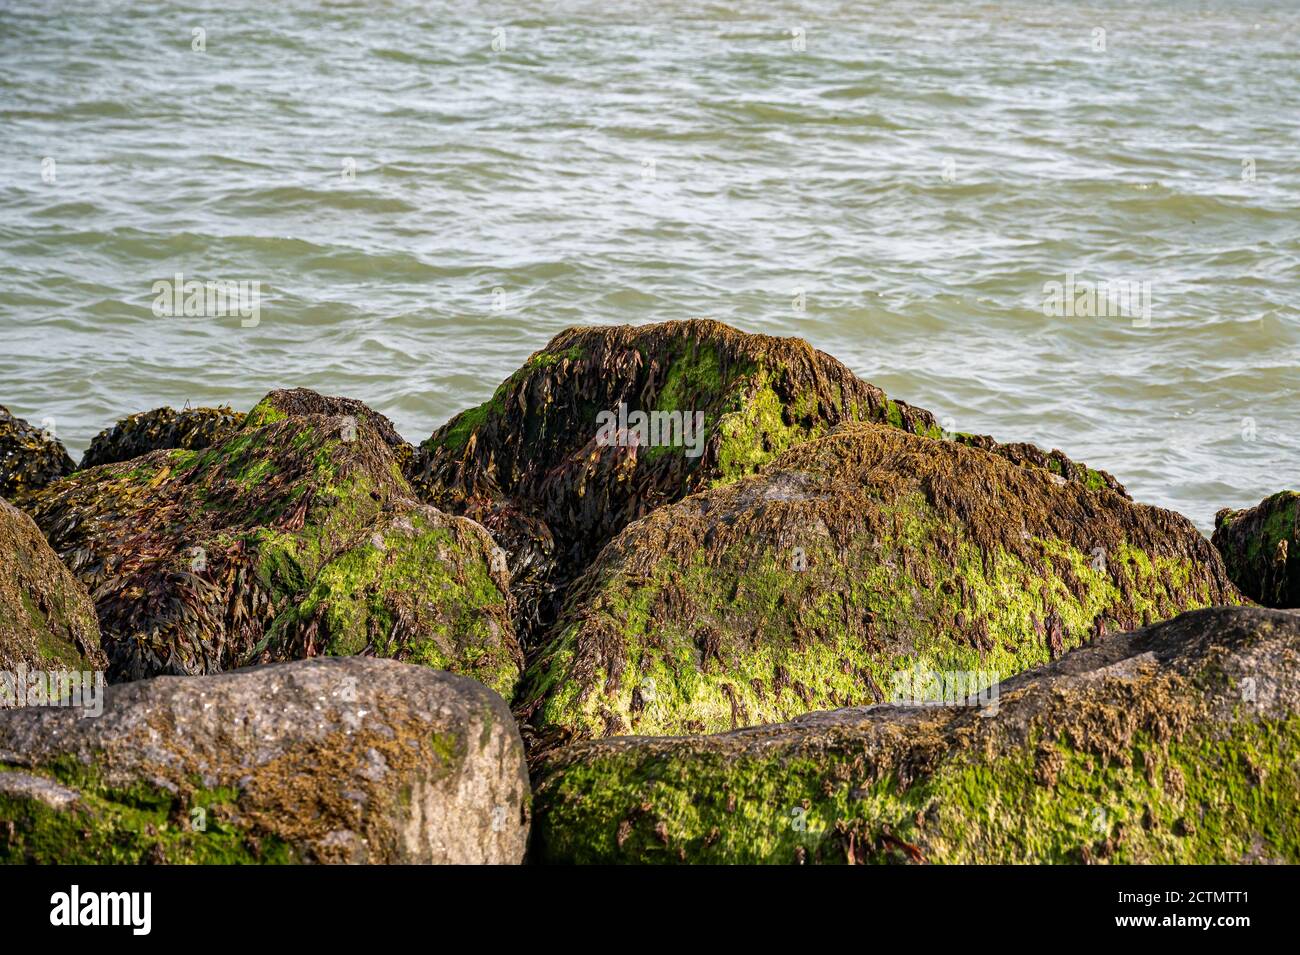 Coastal rocks covered with bladderwrack, Fucus vesiculosus, and Blidingia minima green seaweed Stock Photo